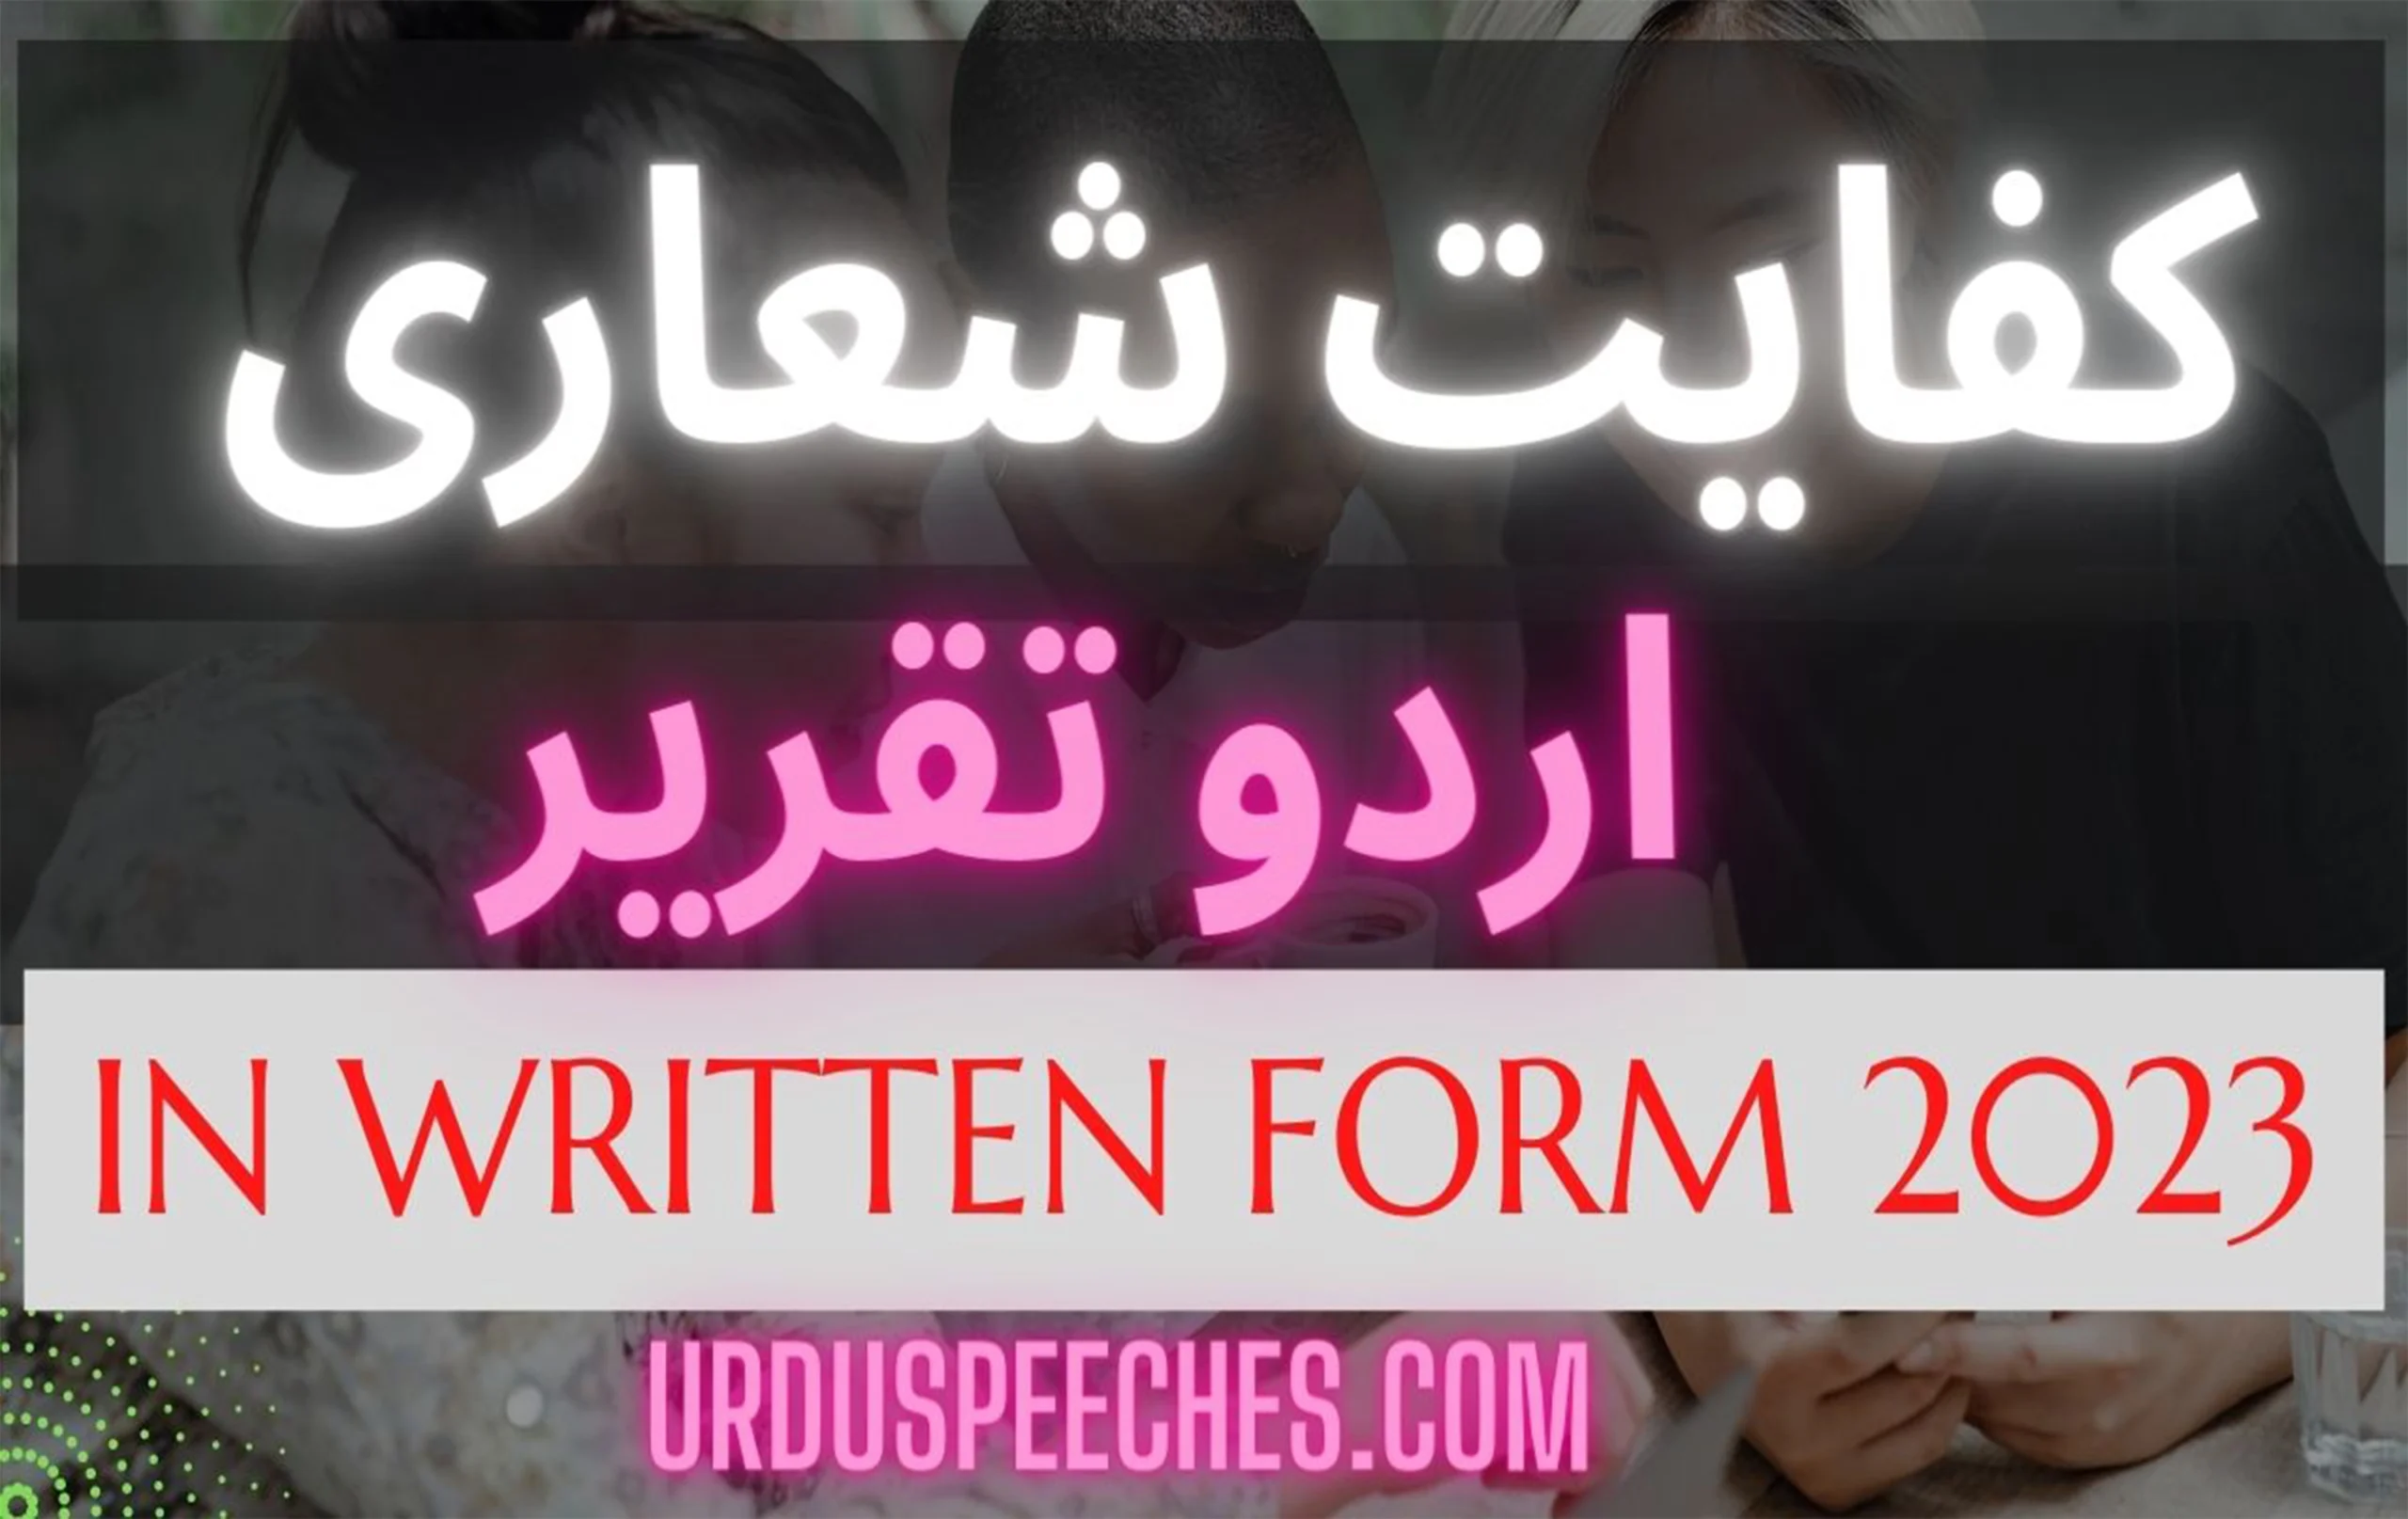 kifayat shuari full essay in urdu